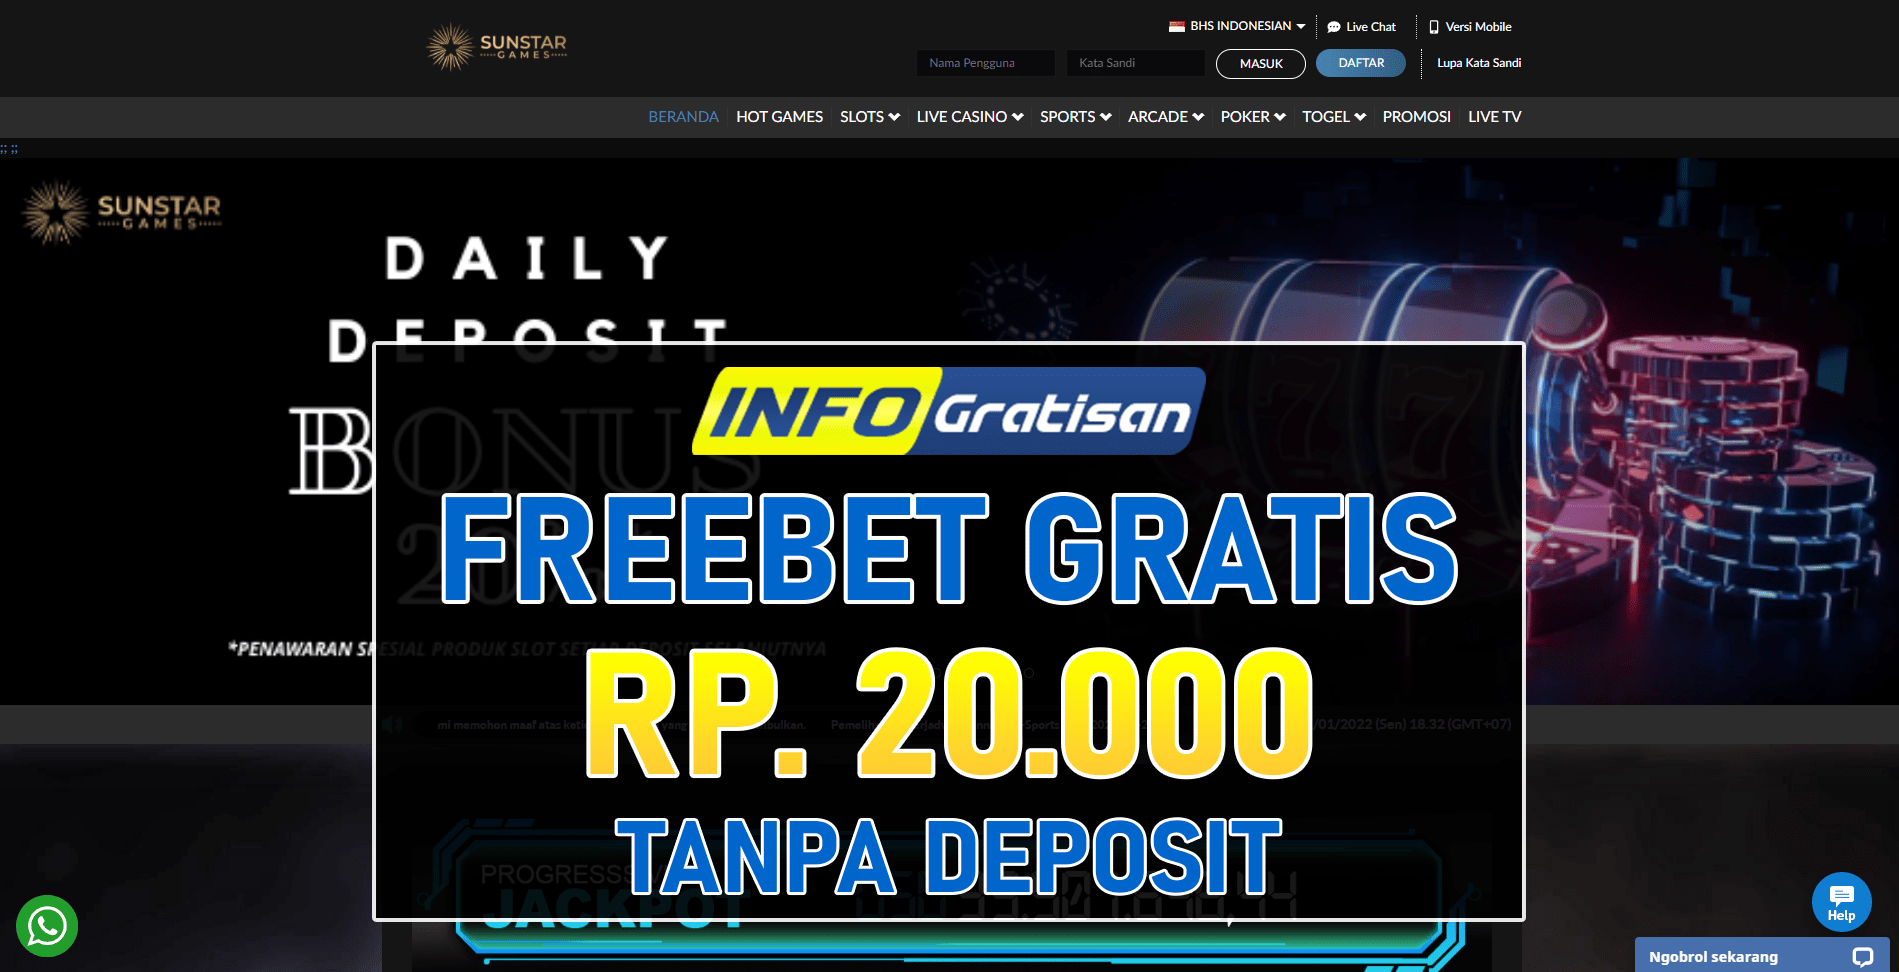 Freebet Gratis Terbaru SUNSTARGAMES